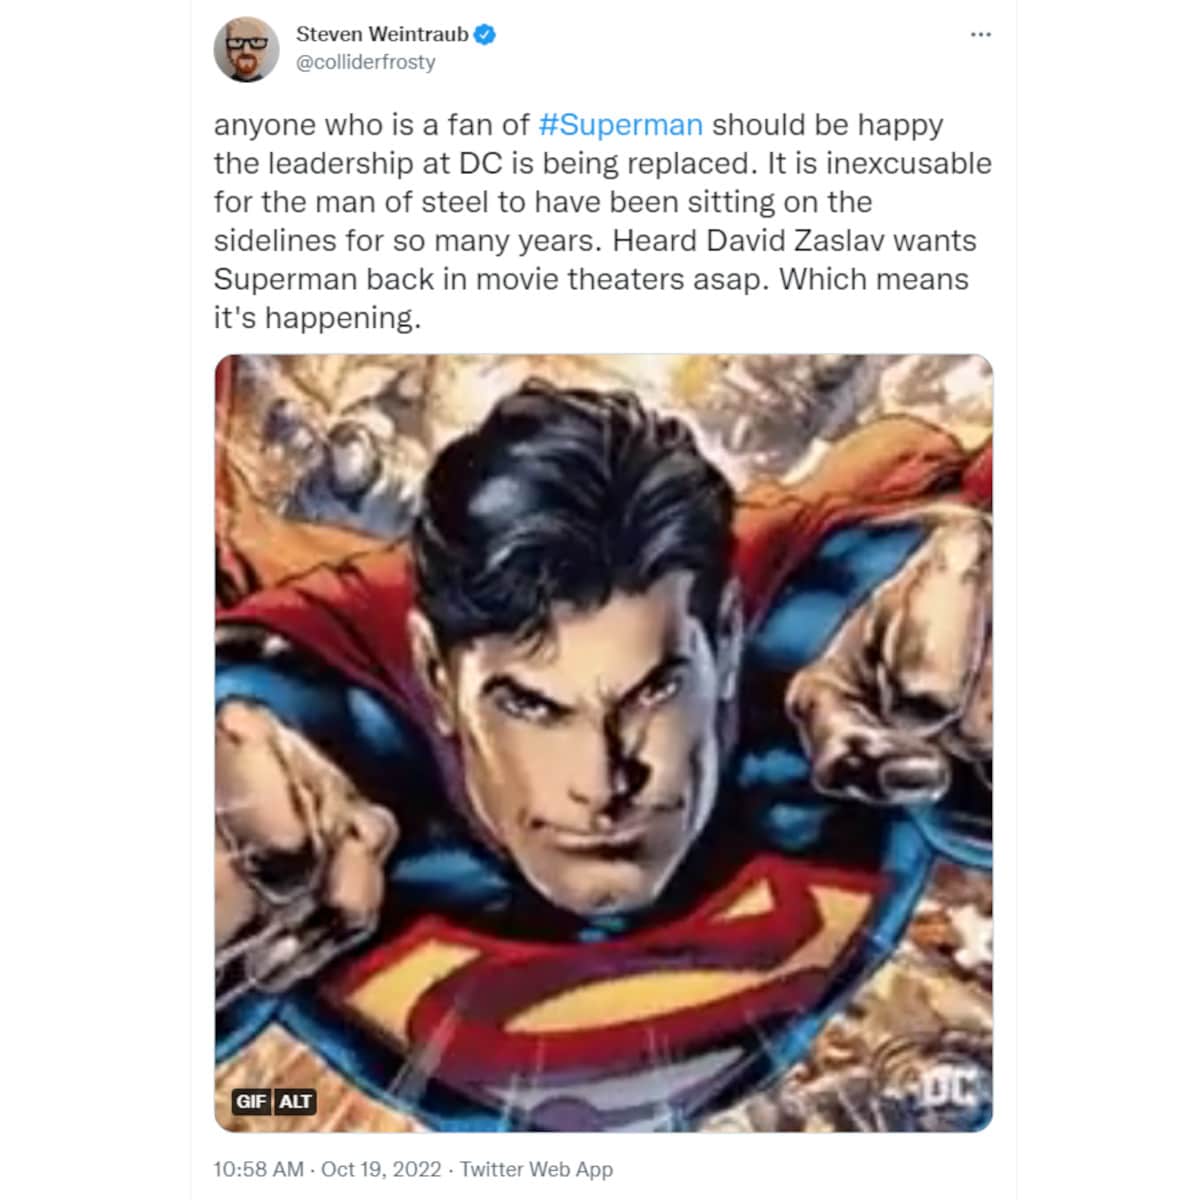 Henry Cavill back as Superman